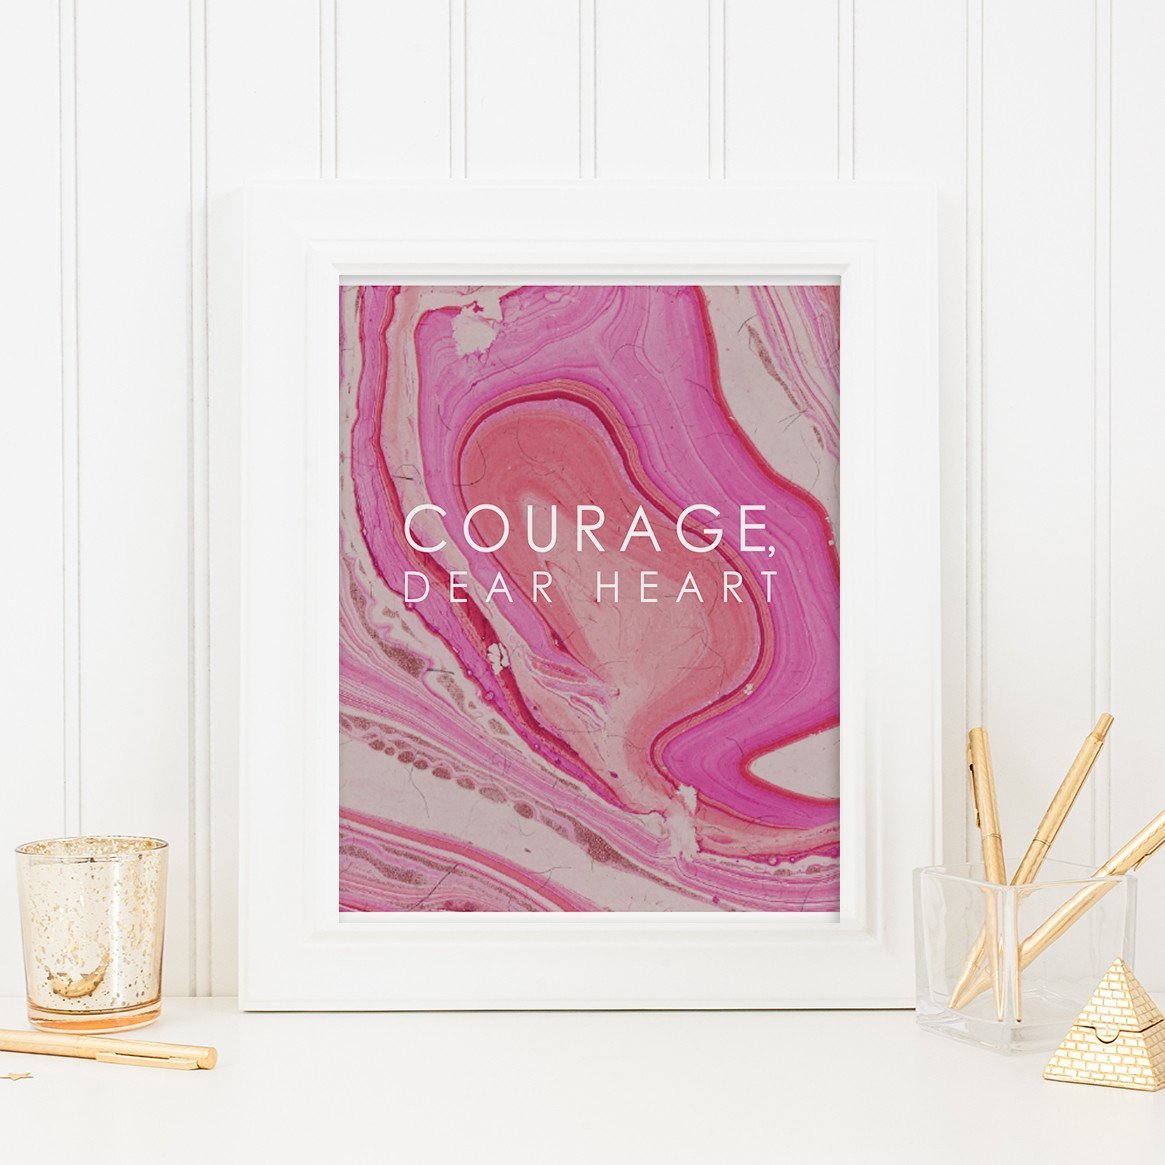 Gallery Prints 12X16 Courage,  Dear Heart Katie Kime